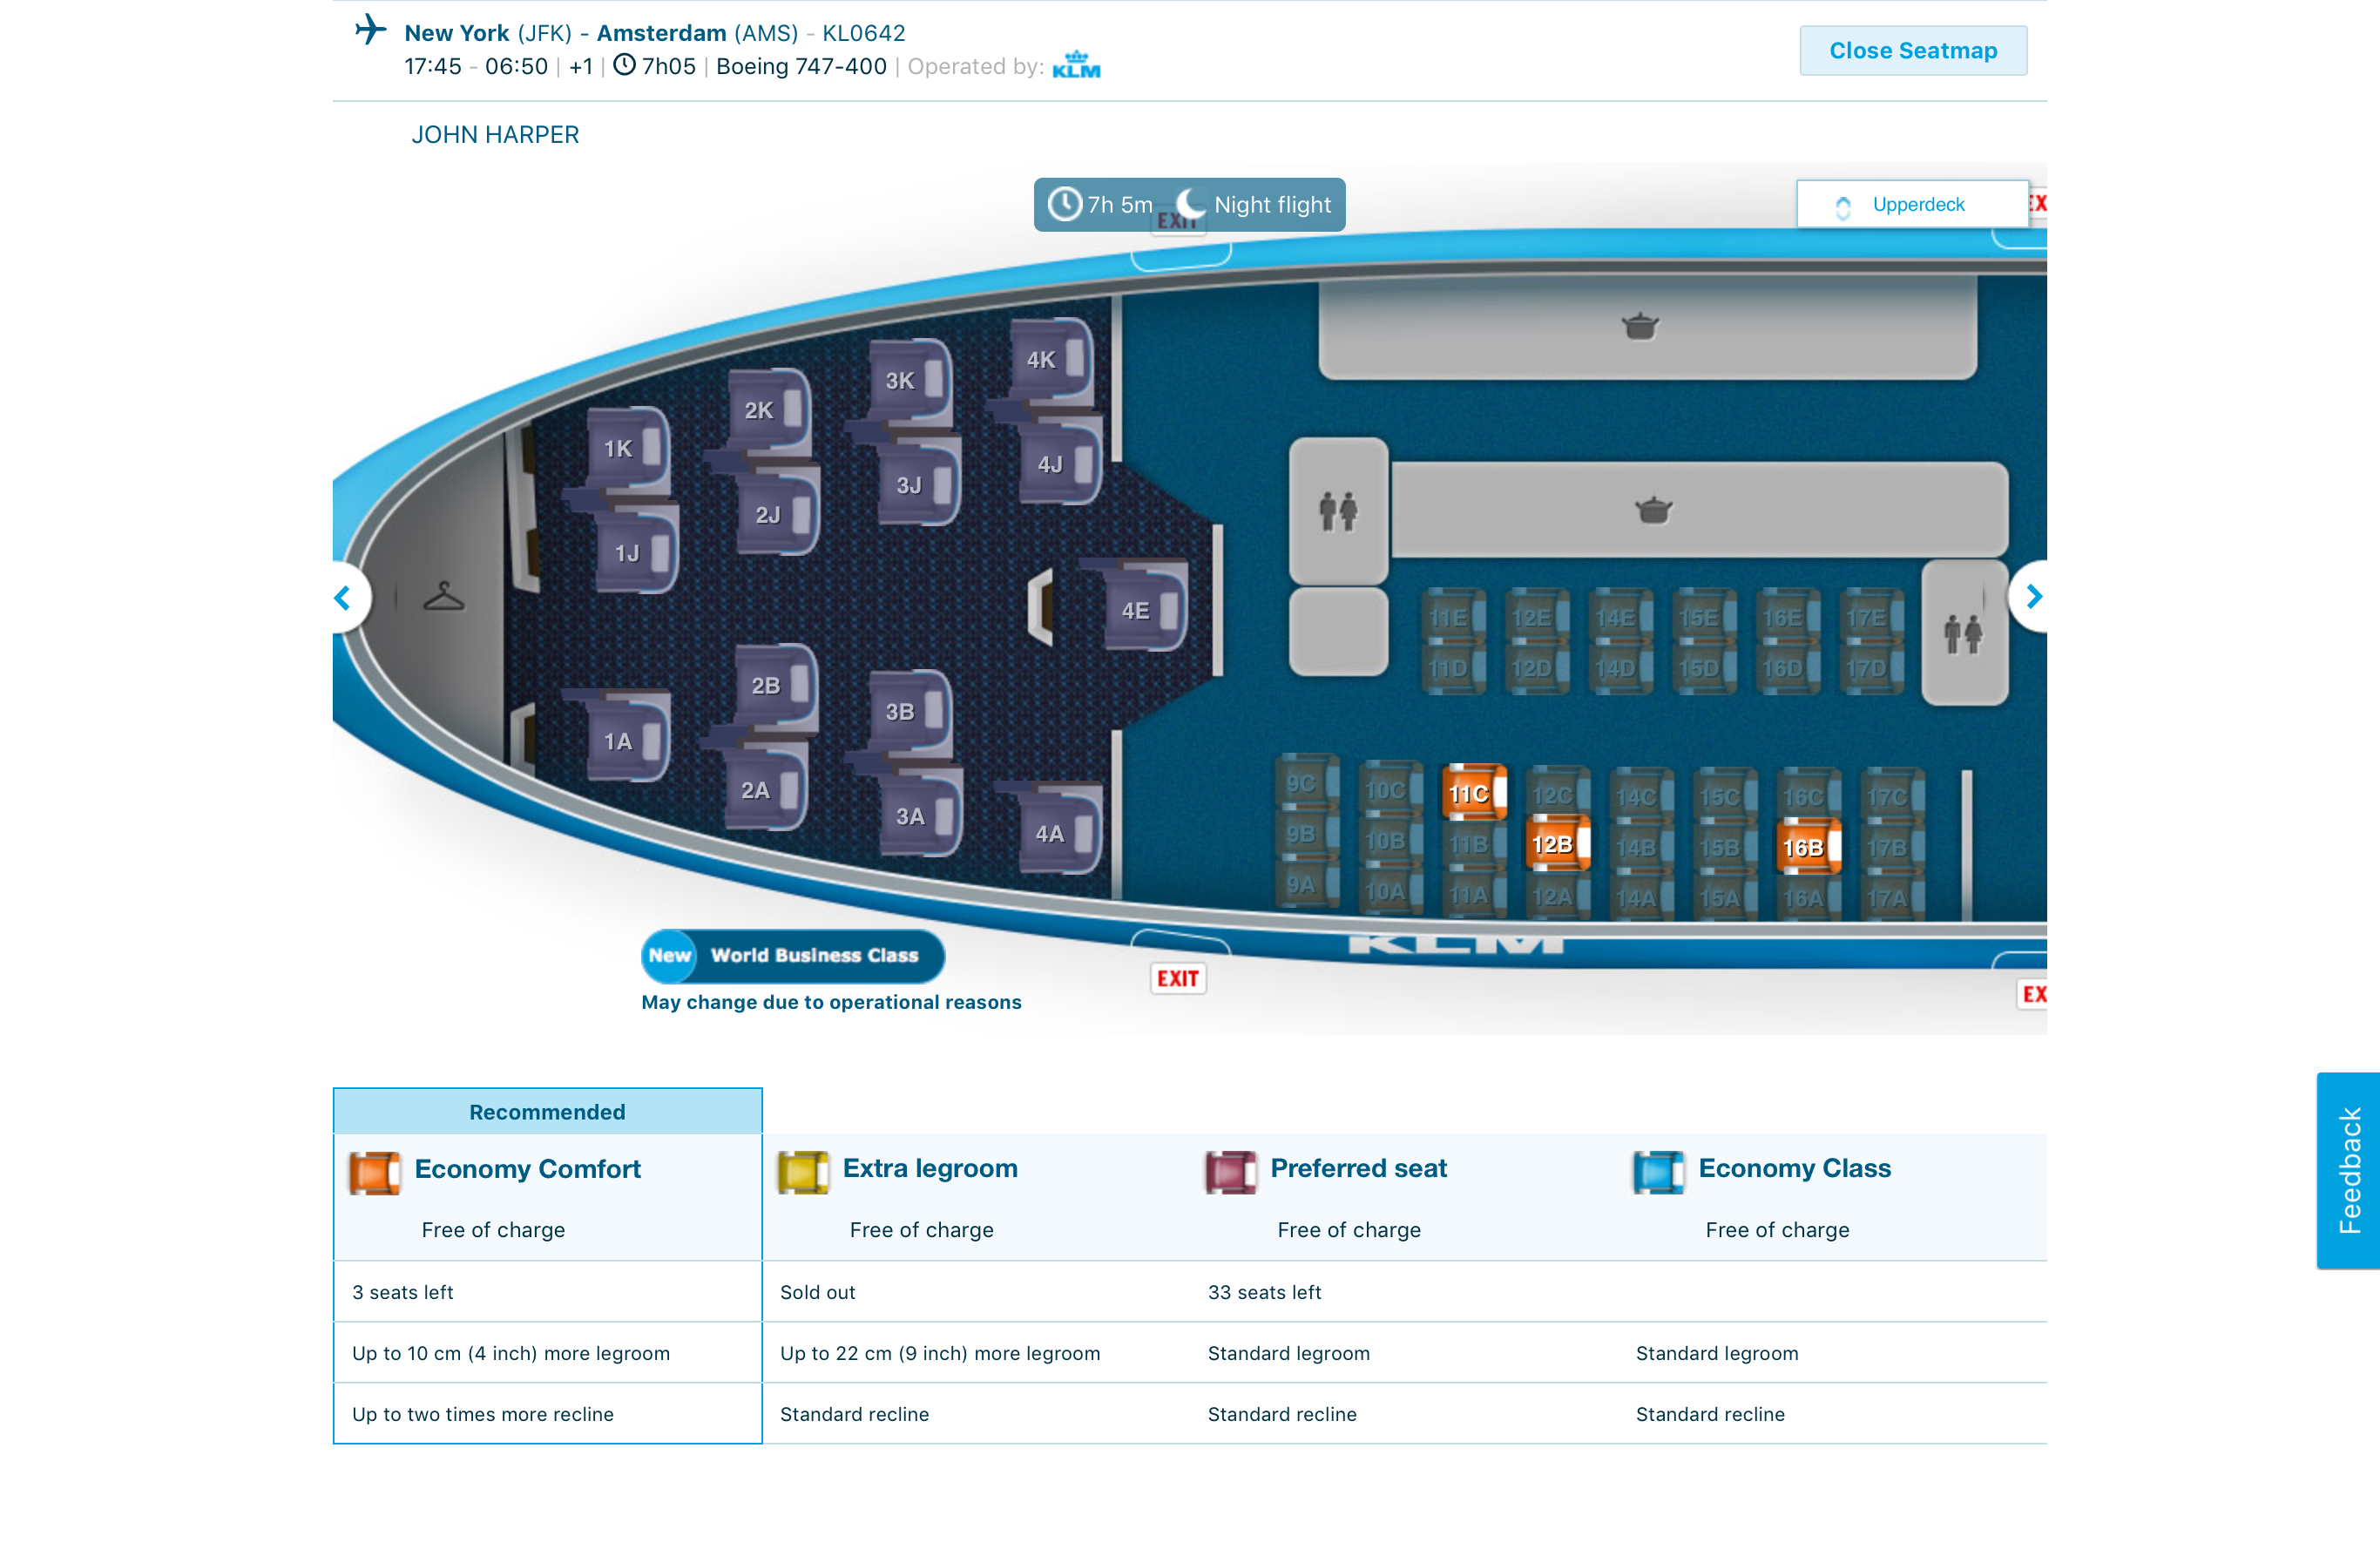 KLM 747 Economy Comfort seating chart